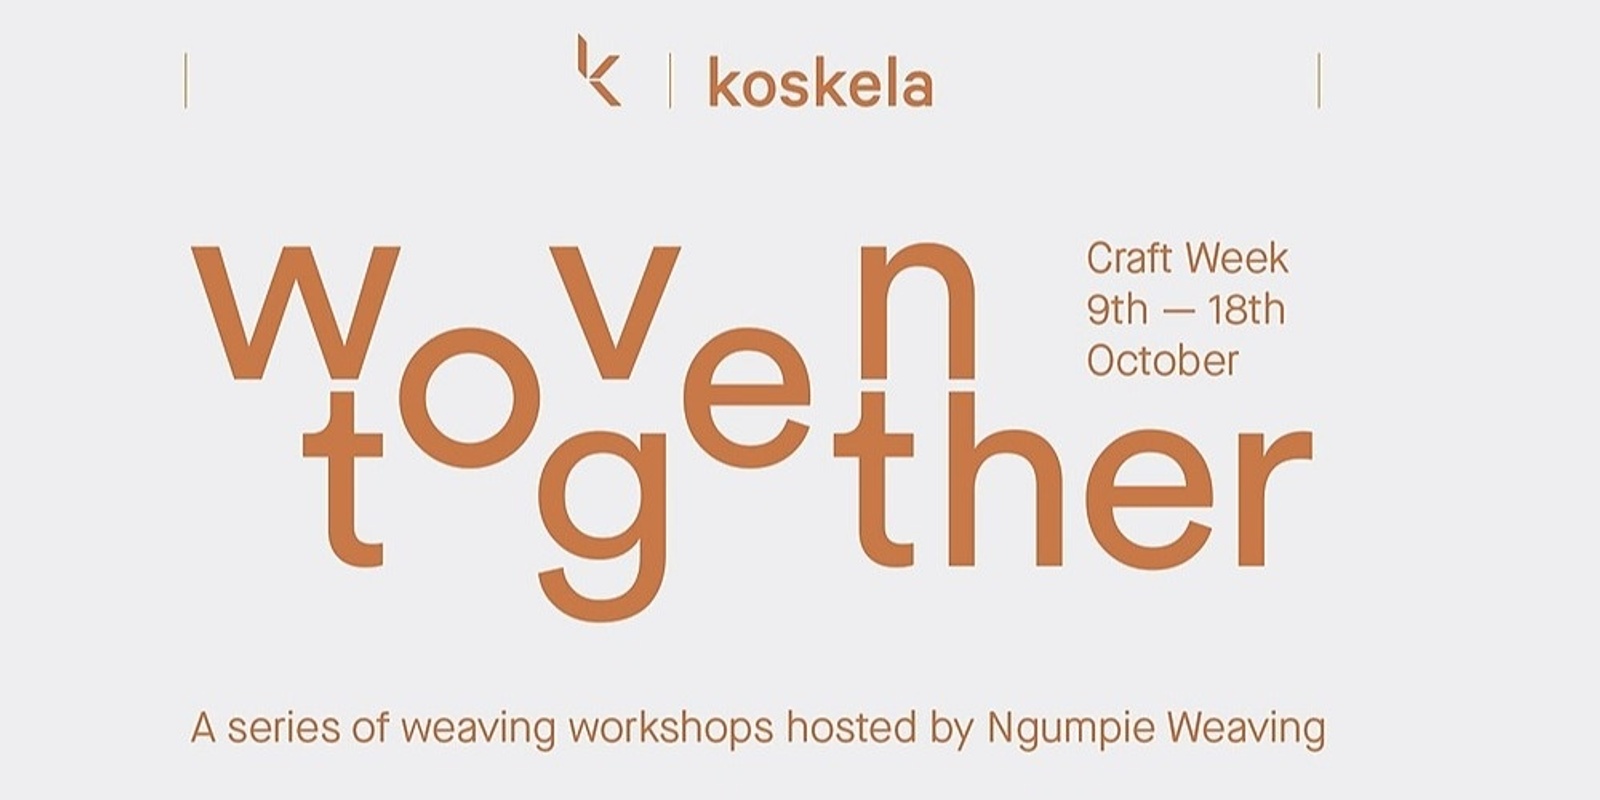 Banner image for Craft Week Weaving Workshop with Ngumpie Weaving